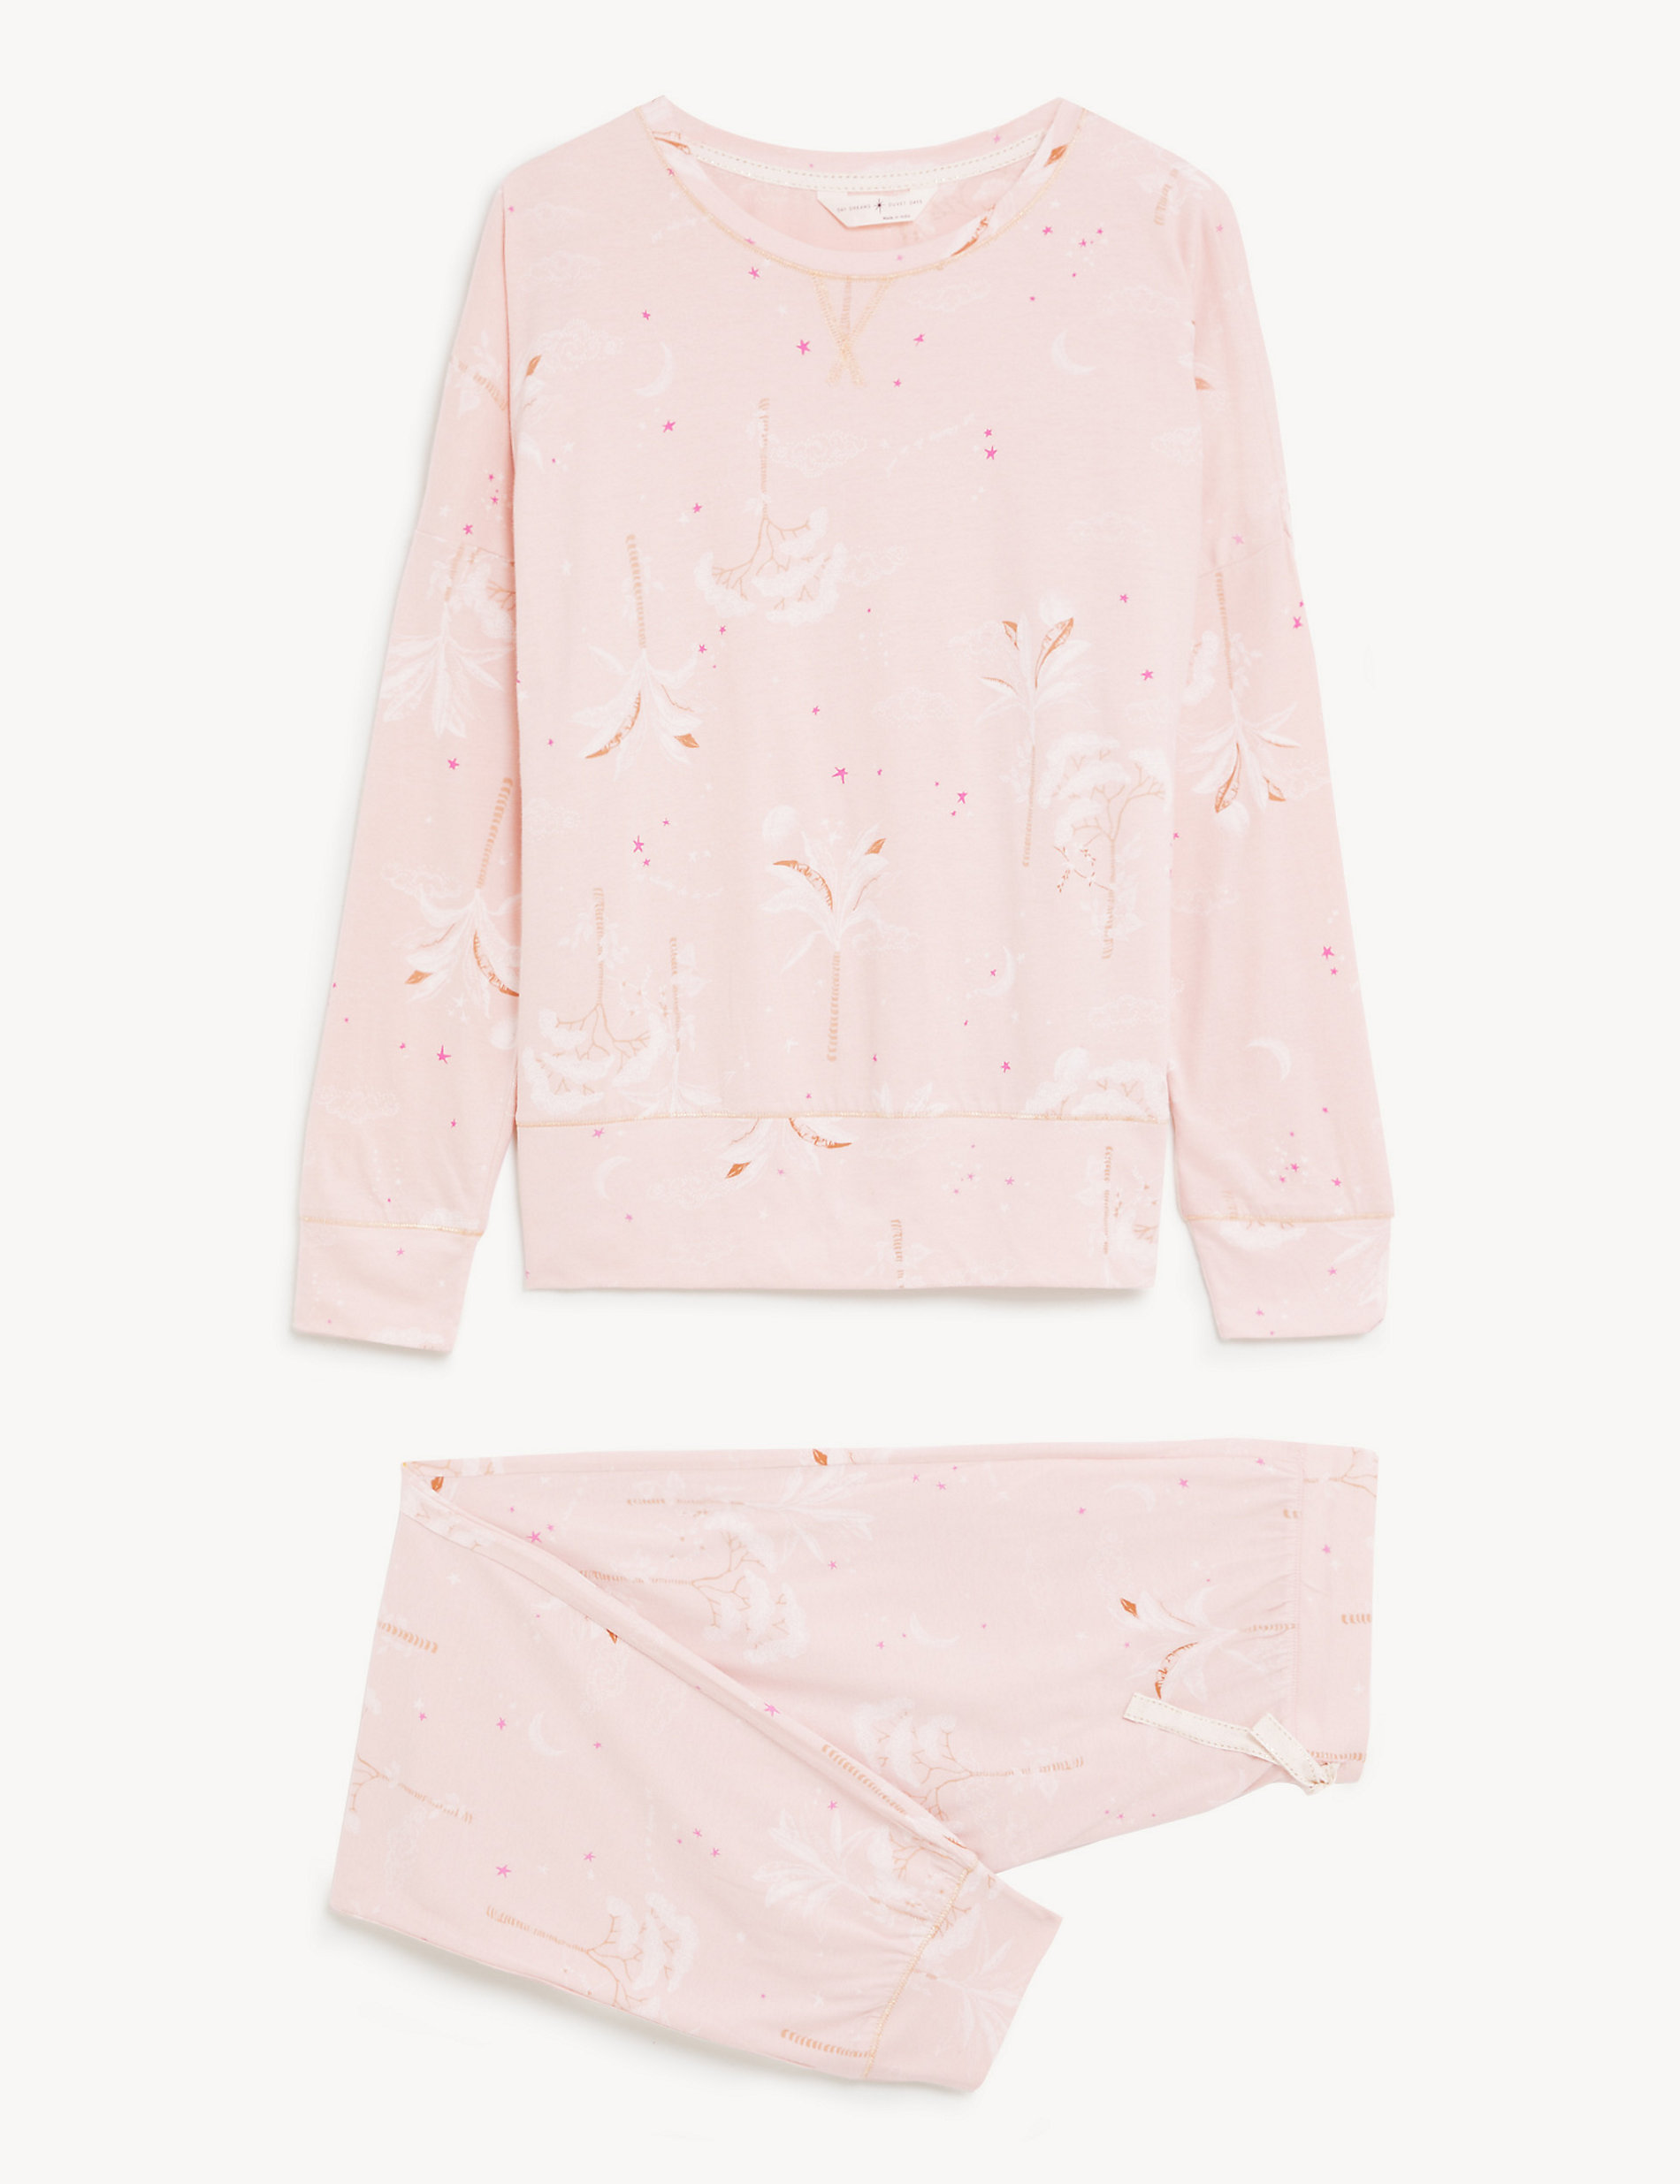 Pure Cotton Floral Print Pyjama Set